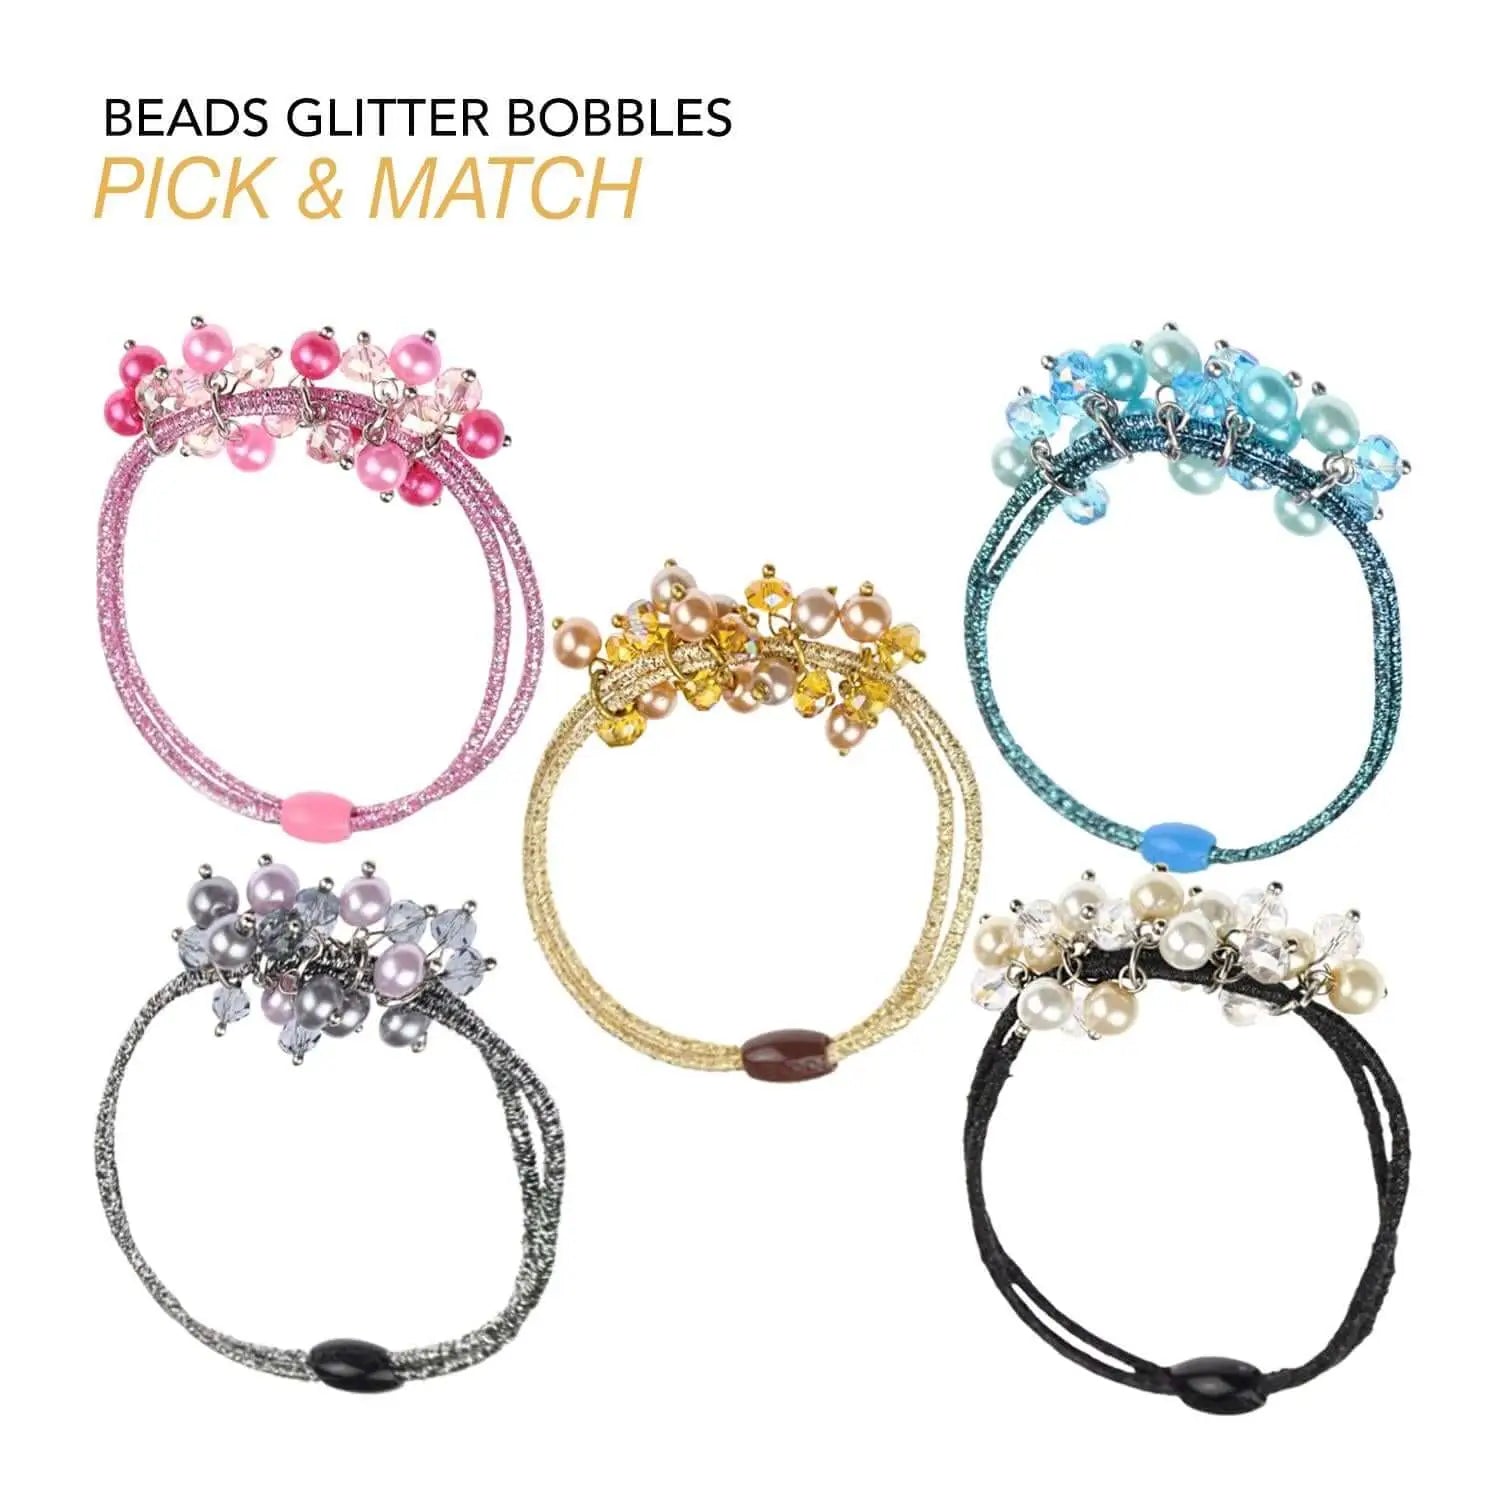 Beaded metallic elastic bracelets displayed in product ’Floral & Beaded Metallic Elastic Bobbles